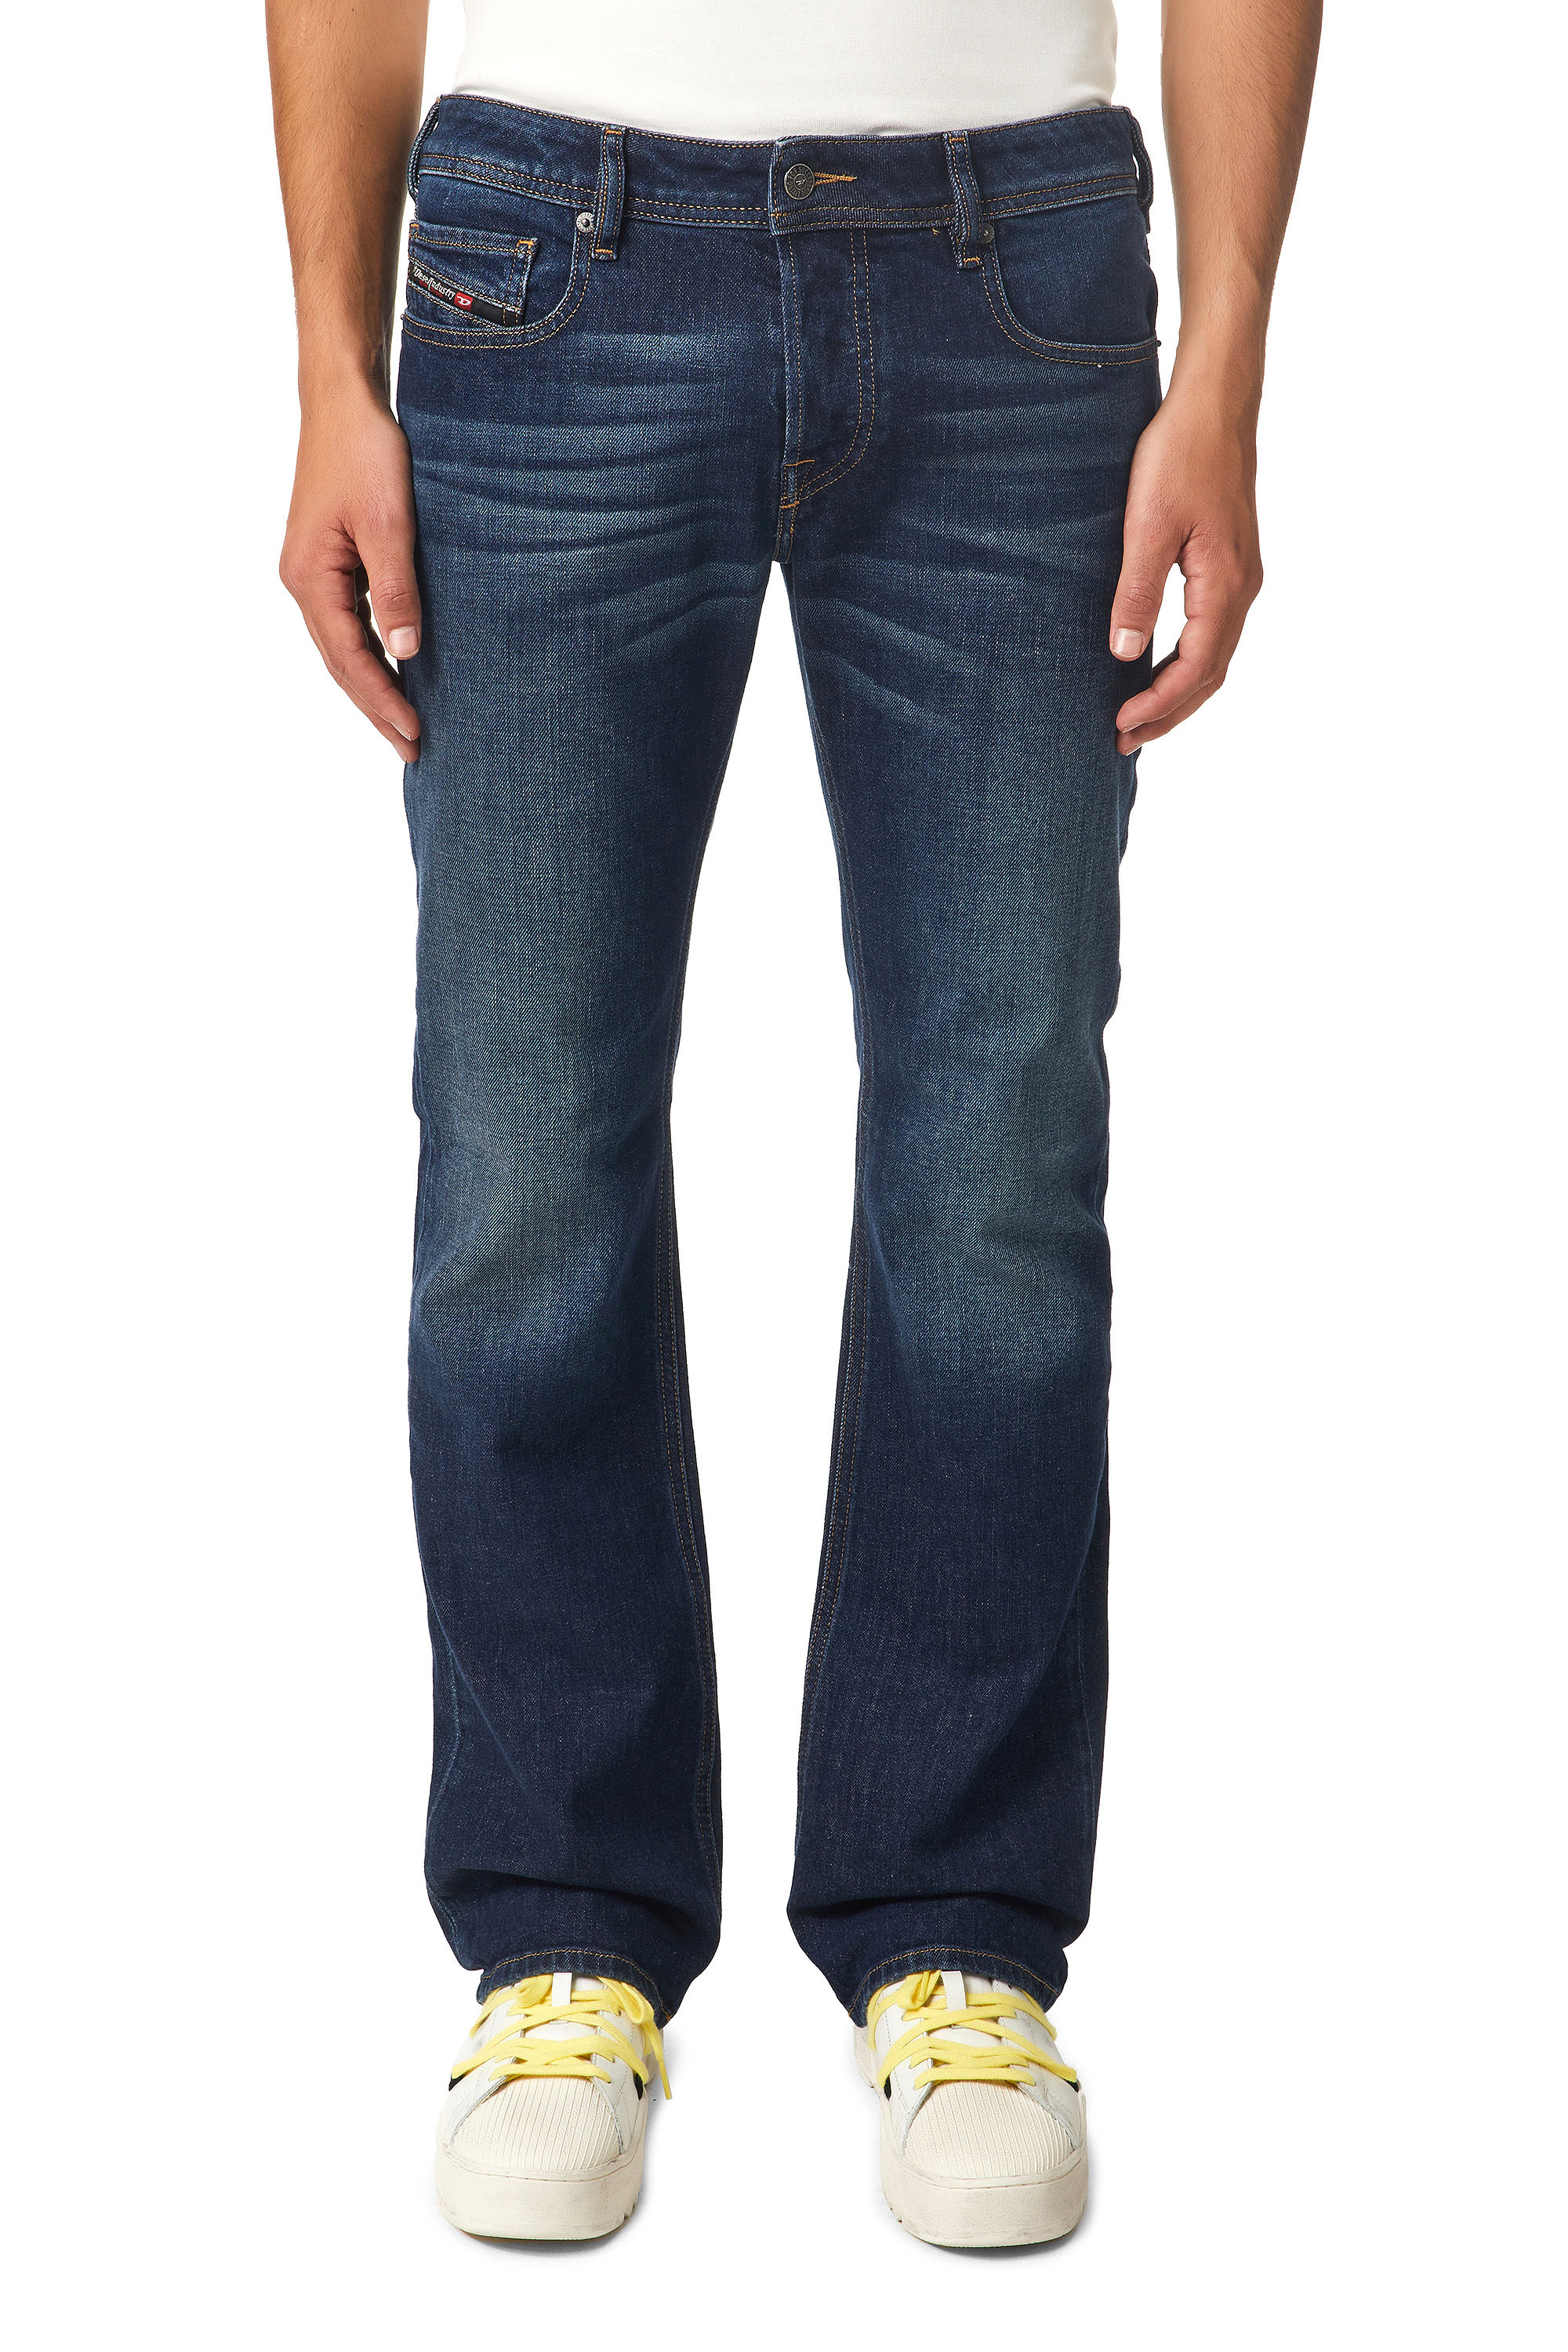 Diesel - Zatiny 009HN Bootcut Jeans,  - Image 2